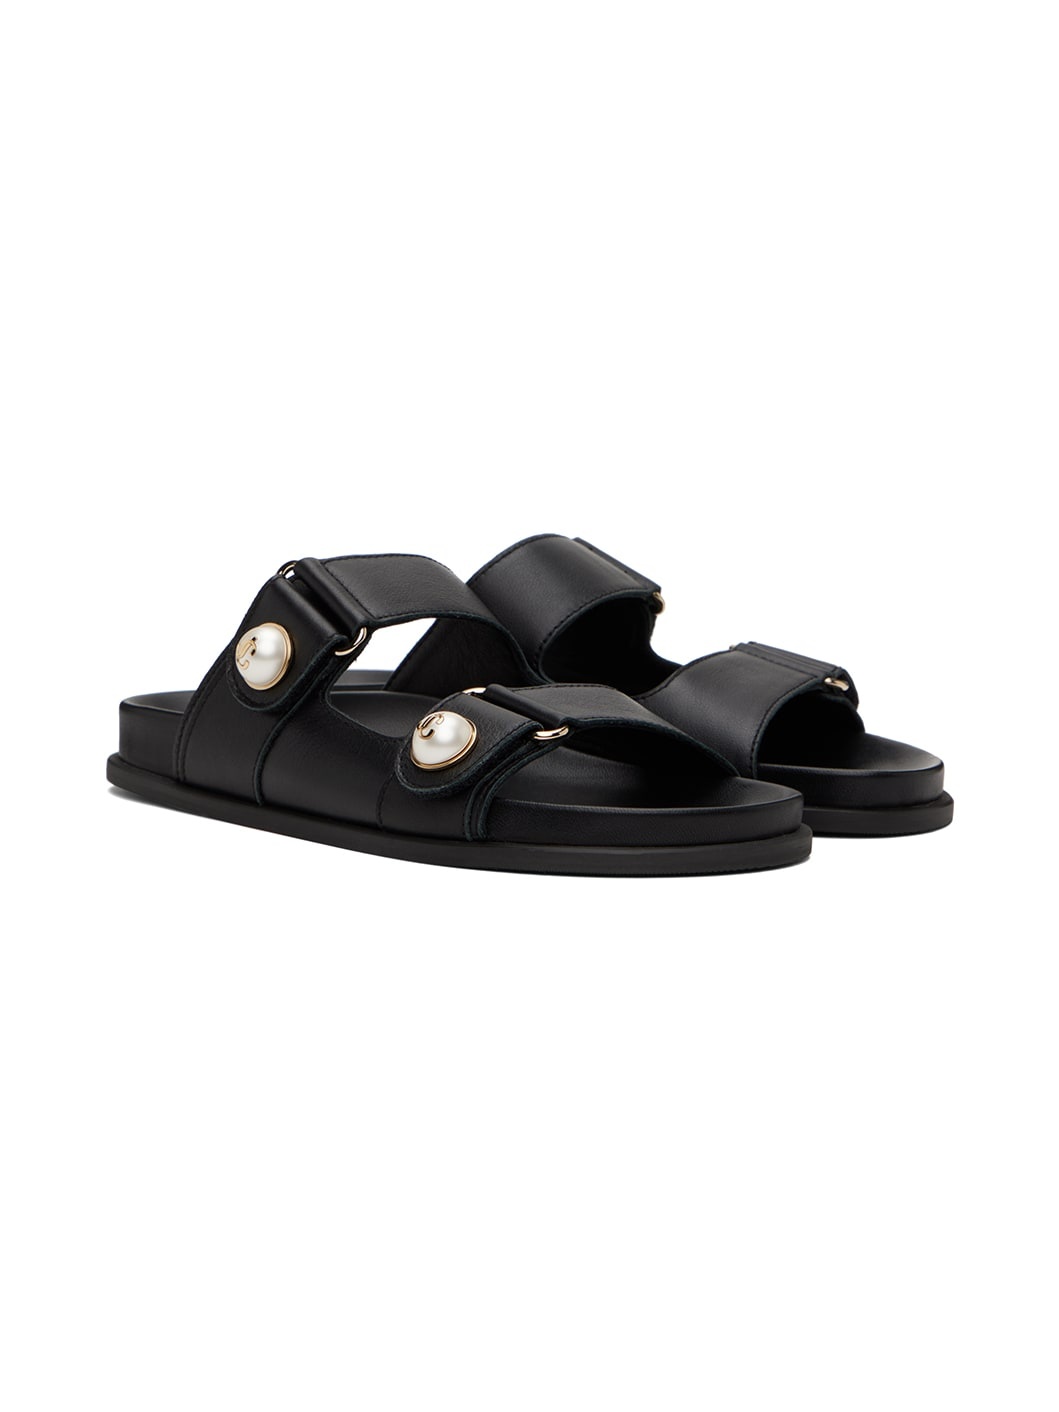 Black Fayence Sandals - 4